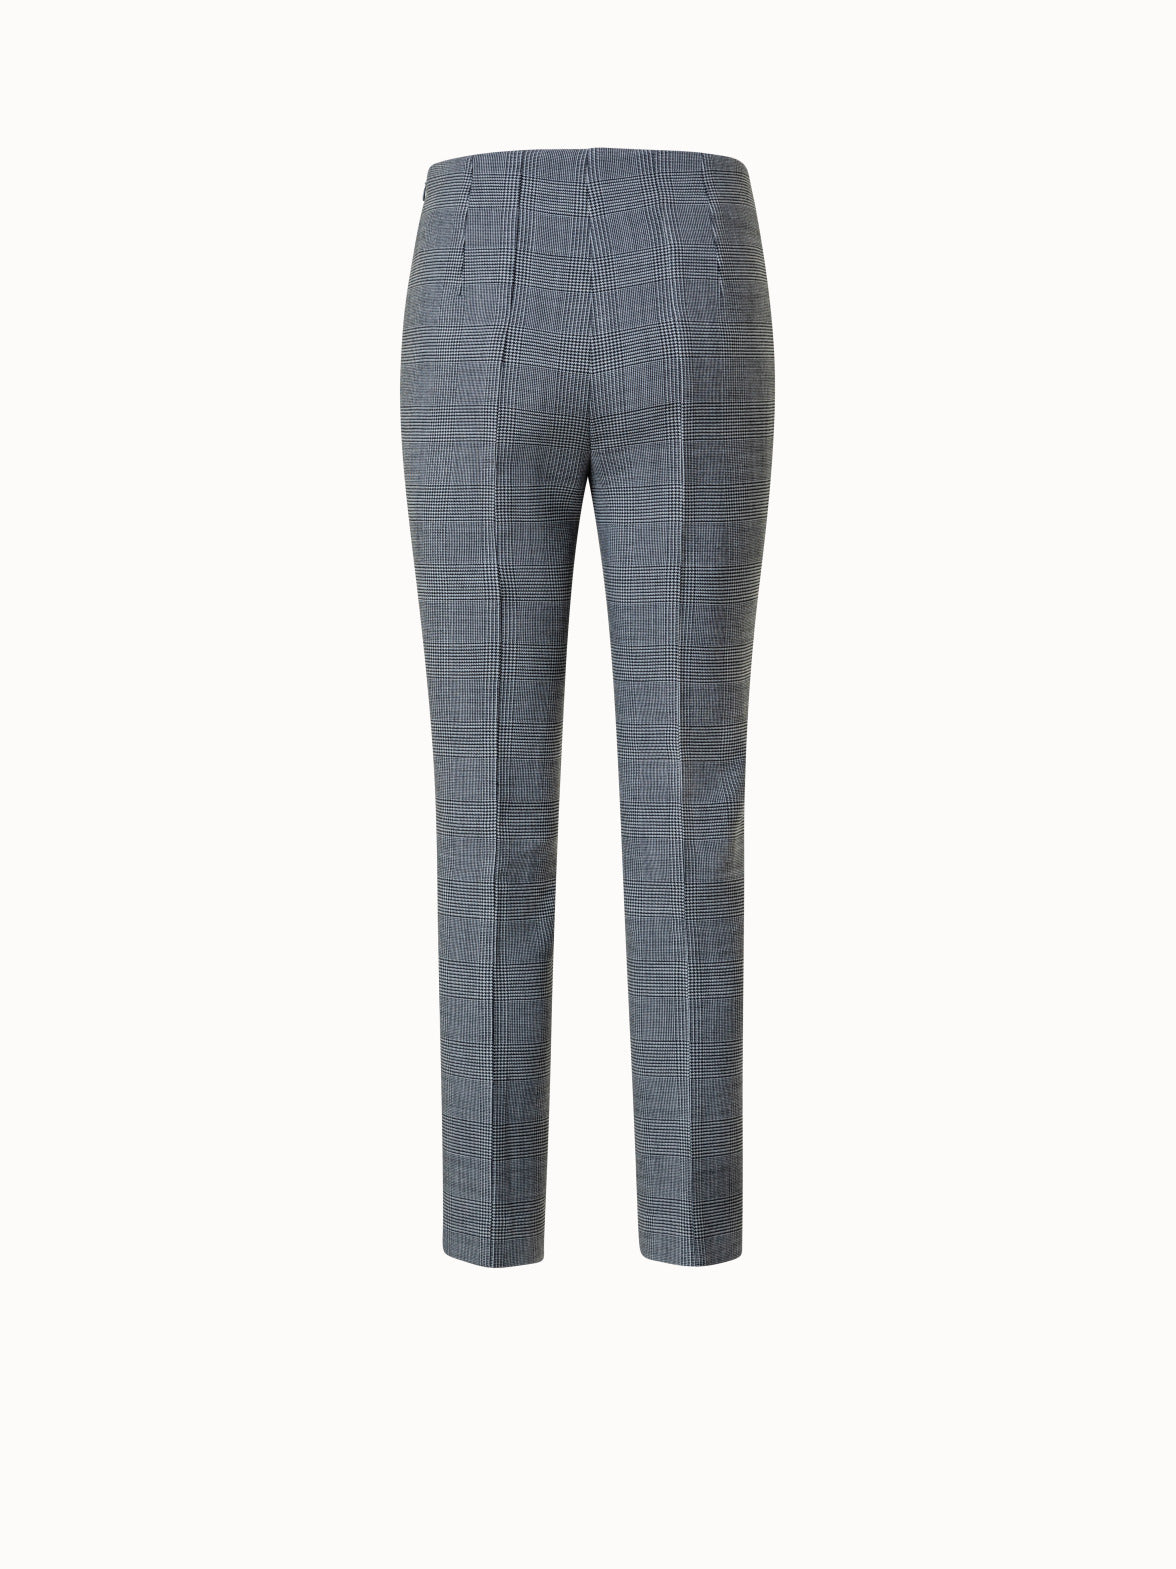 Finest Italian plus size grey tartan scottish jersey trousers by Elgi